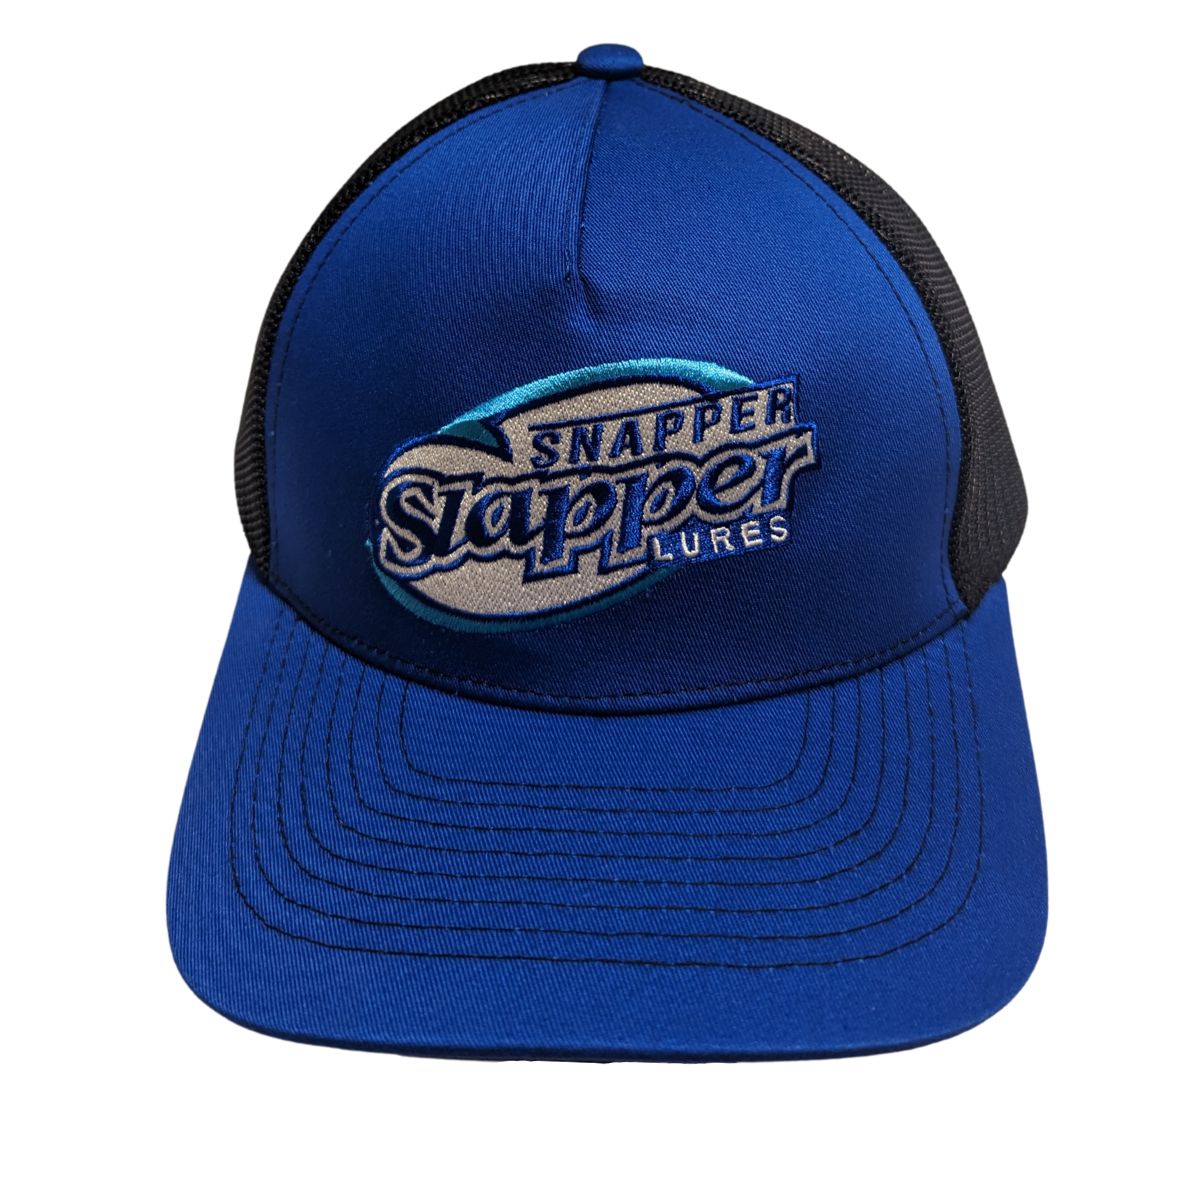 Snapper Slapper Snapback Trucker Cap